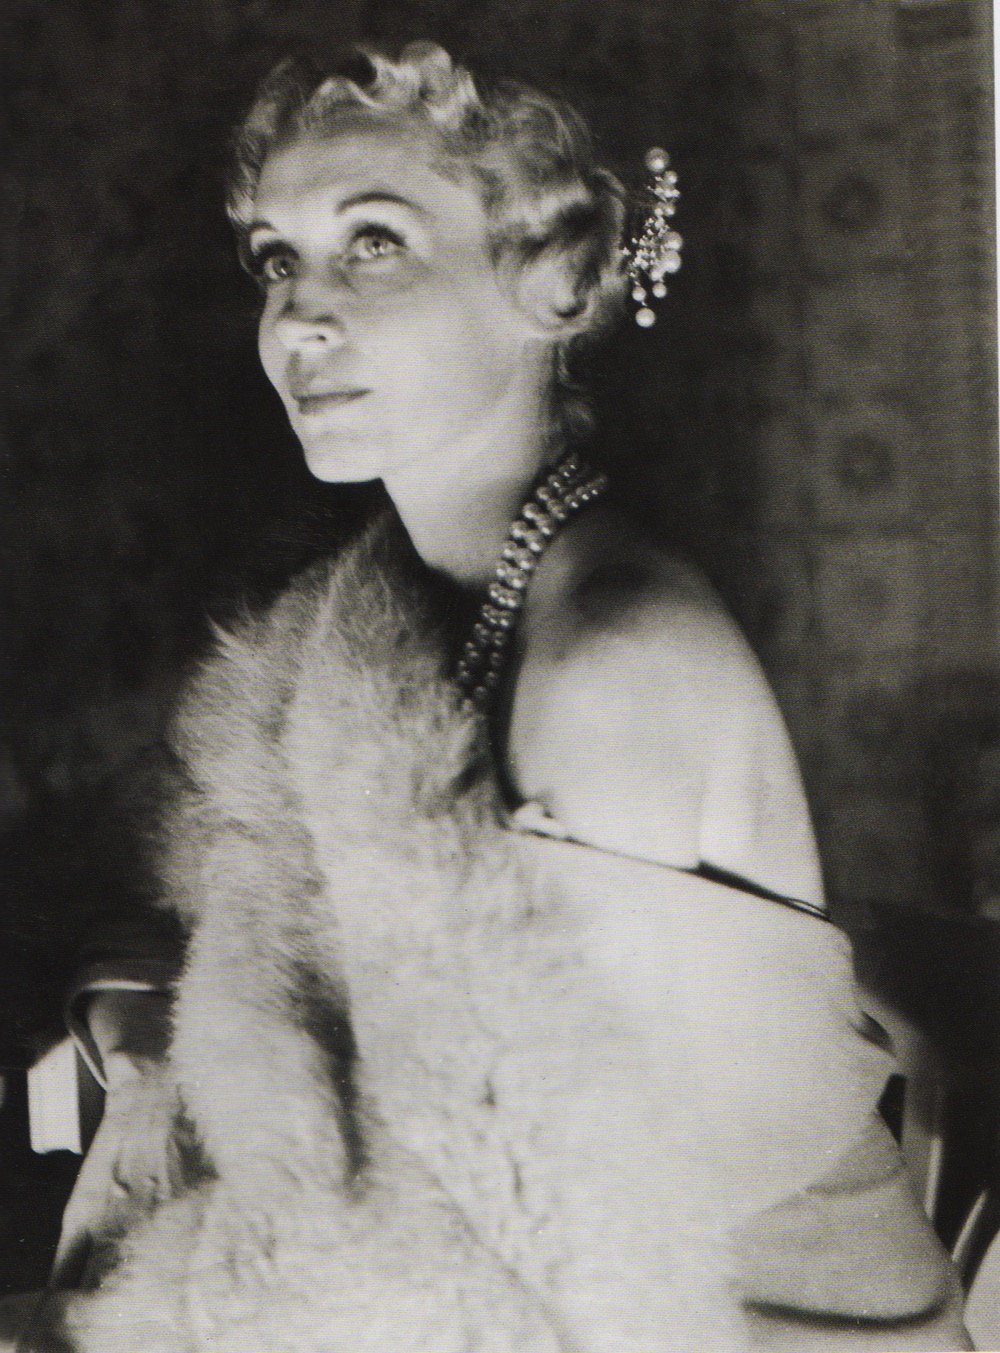 Elegance in 1930s fashion - Diamond dress clips (on fur) and diamond earrings.